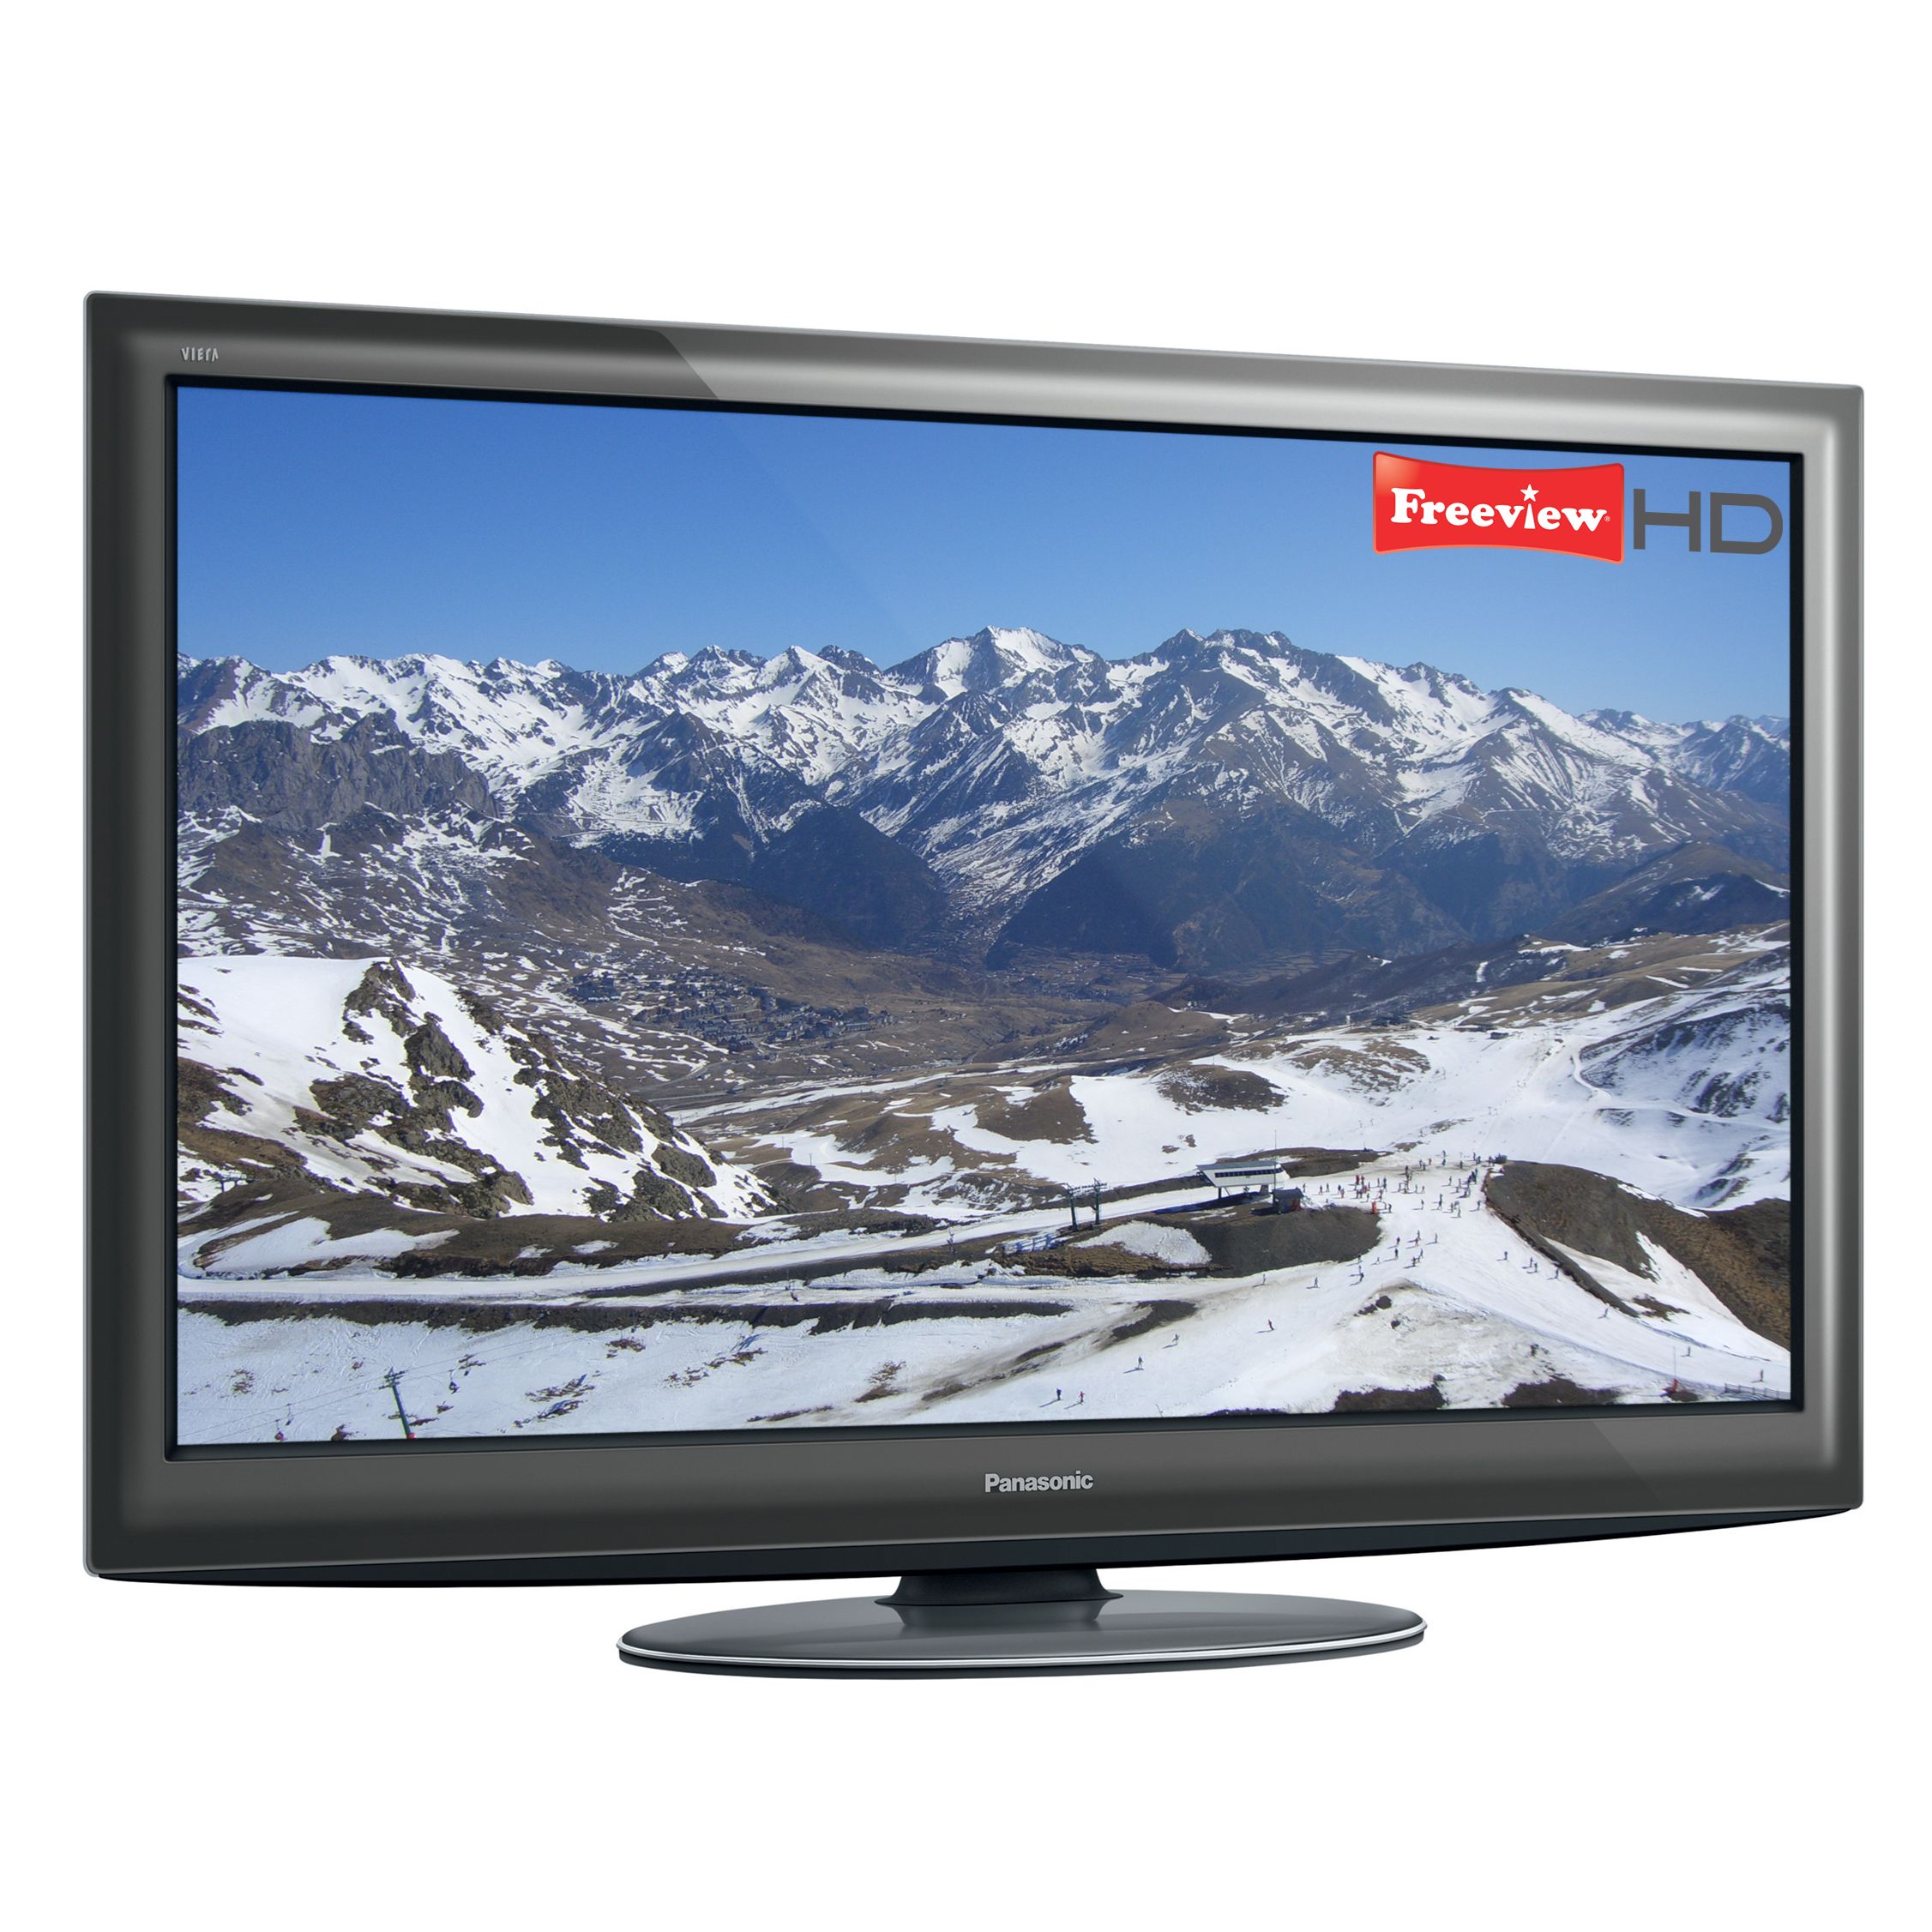 Panasonic Viera TX-L37D25B LCD/LED HD 1080p TV, 37" with Built-in freesat & Freeview HD at John Lewis